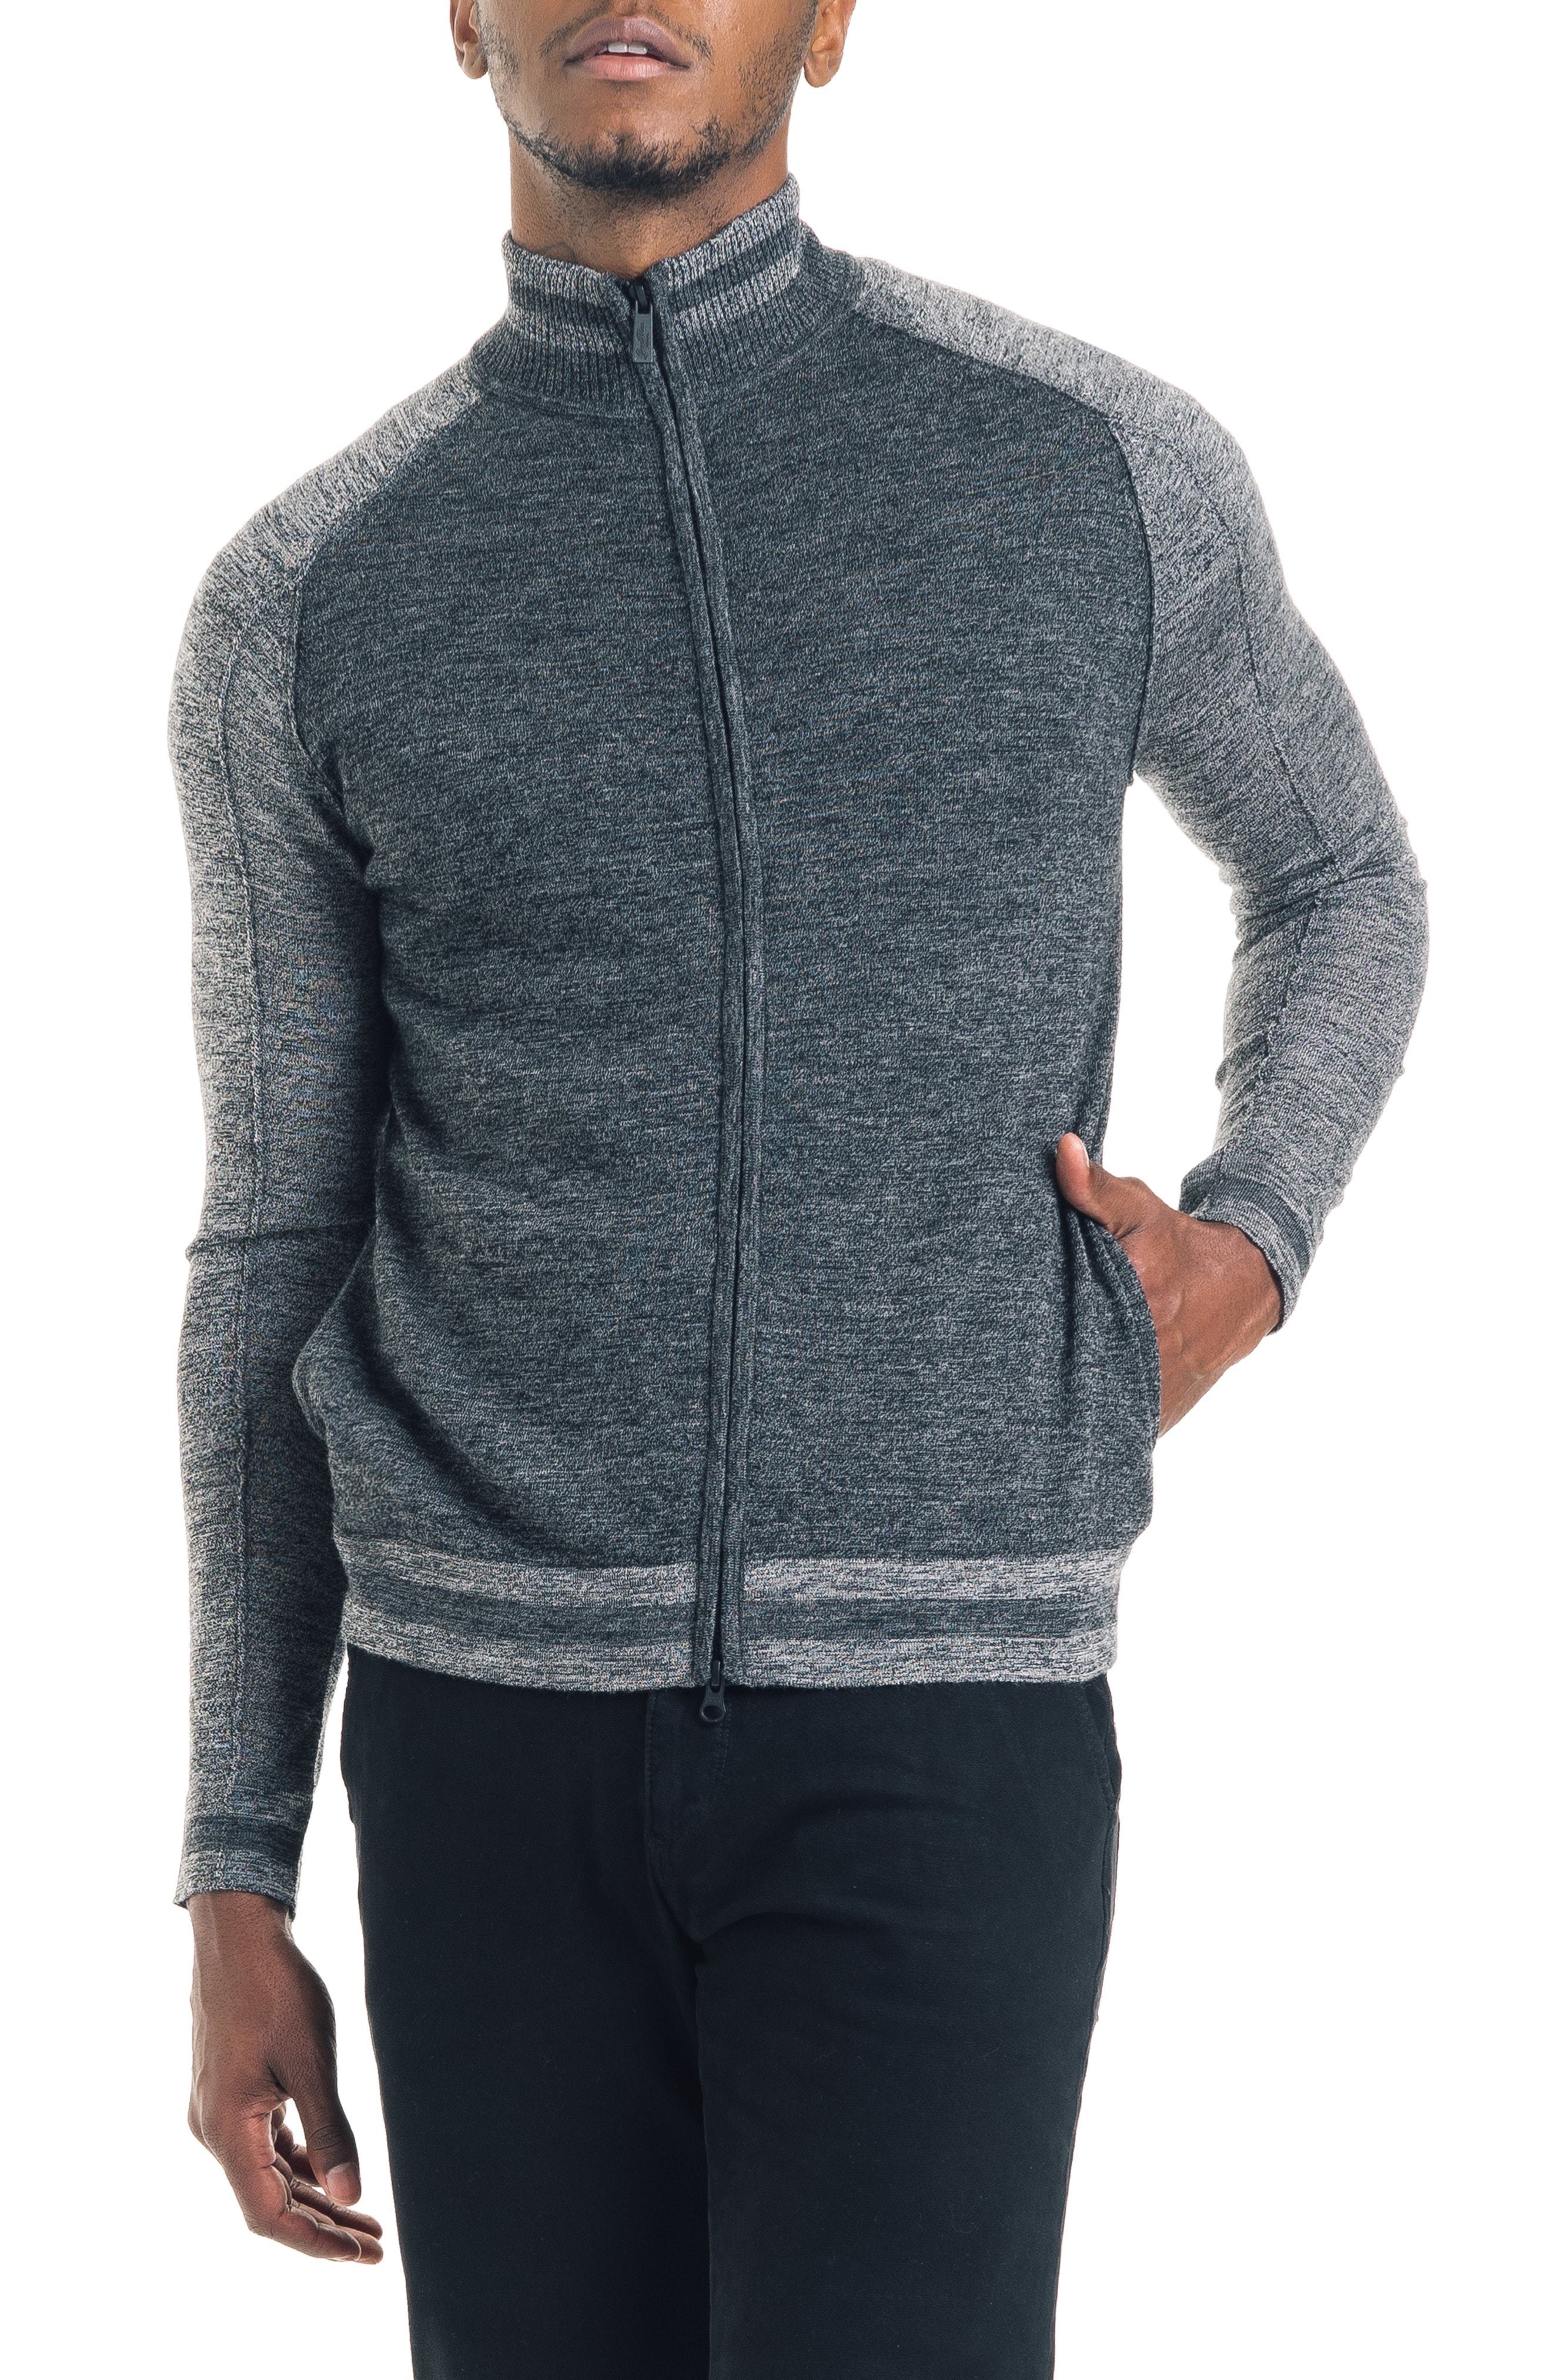 Good Man Brand Modern Slim Fit Merino Wool Track Jacket, $113 